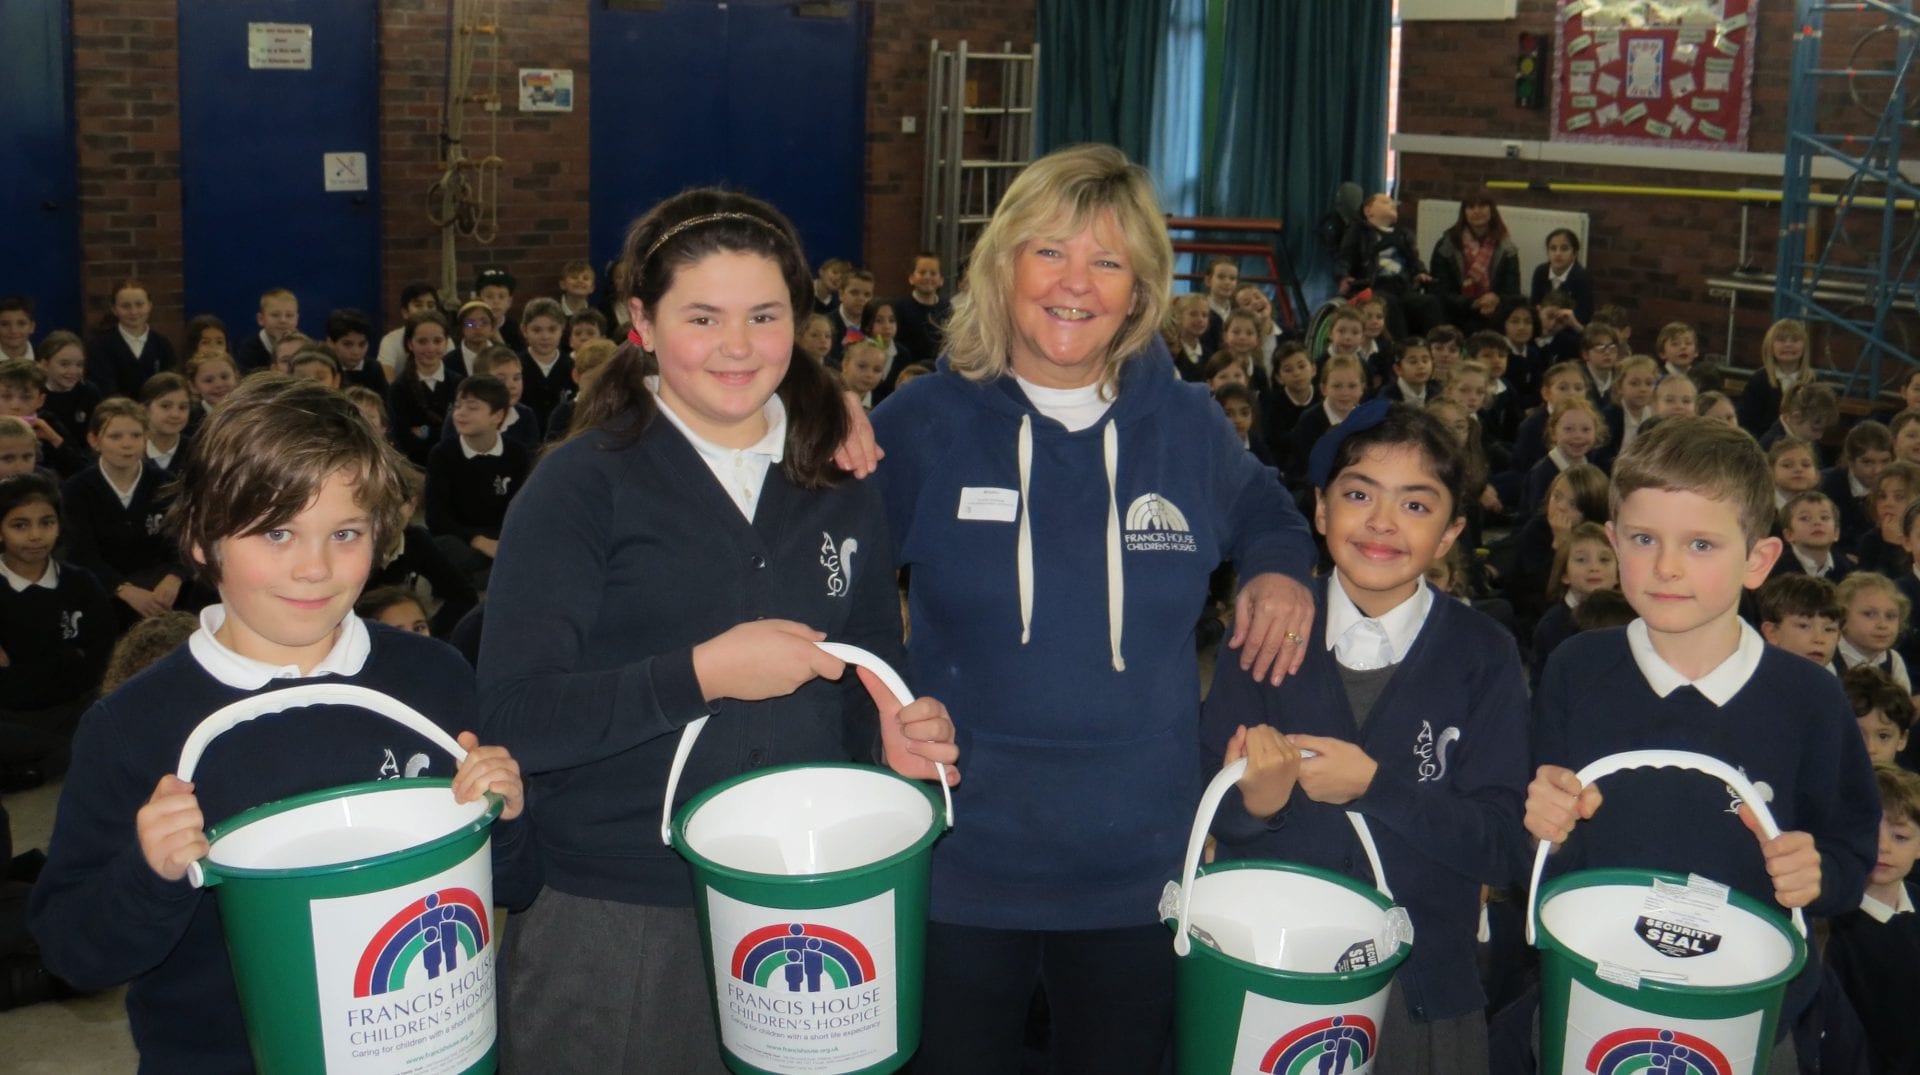 Alderley Edge Community School pupils fundraising with buckets